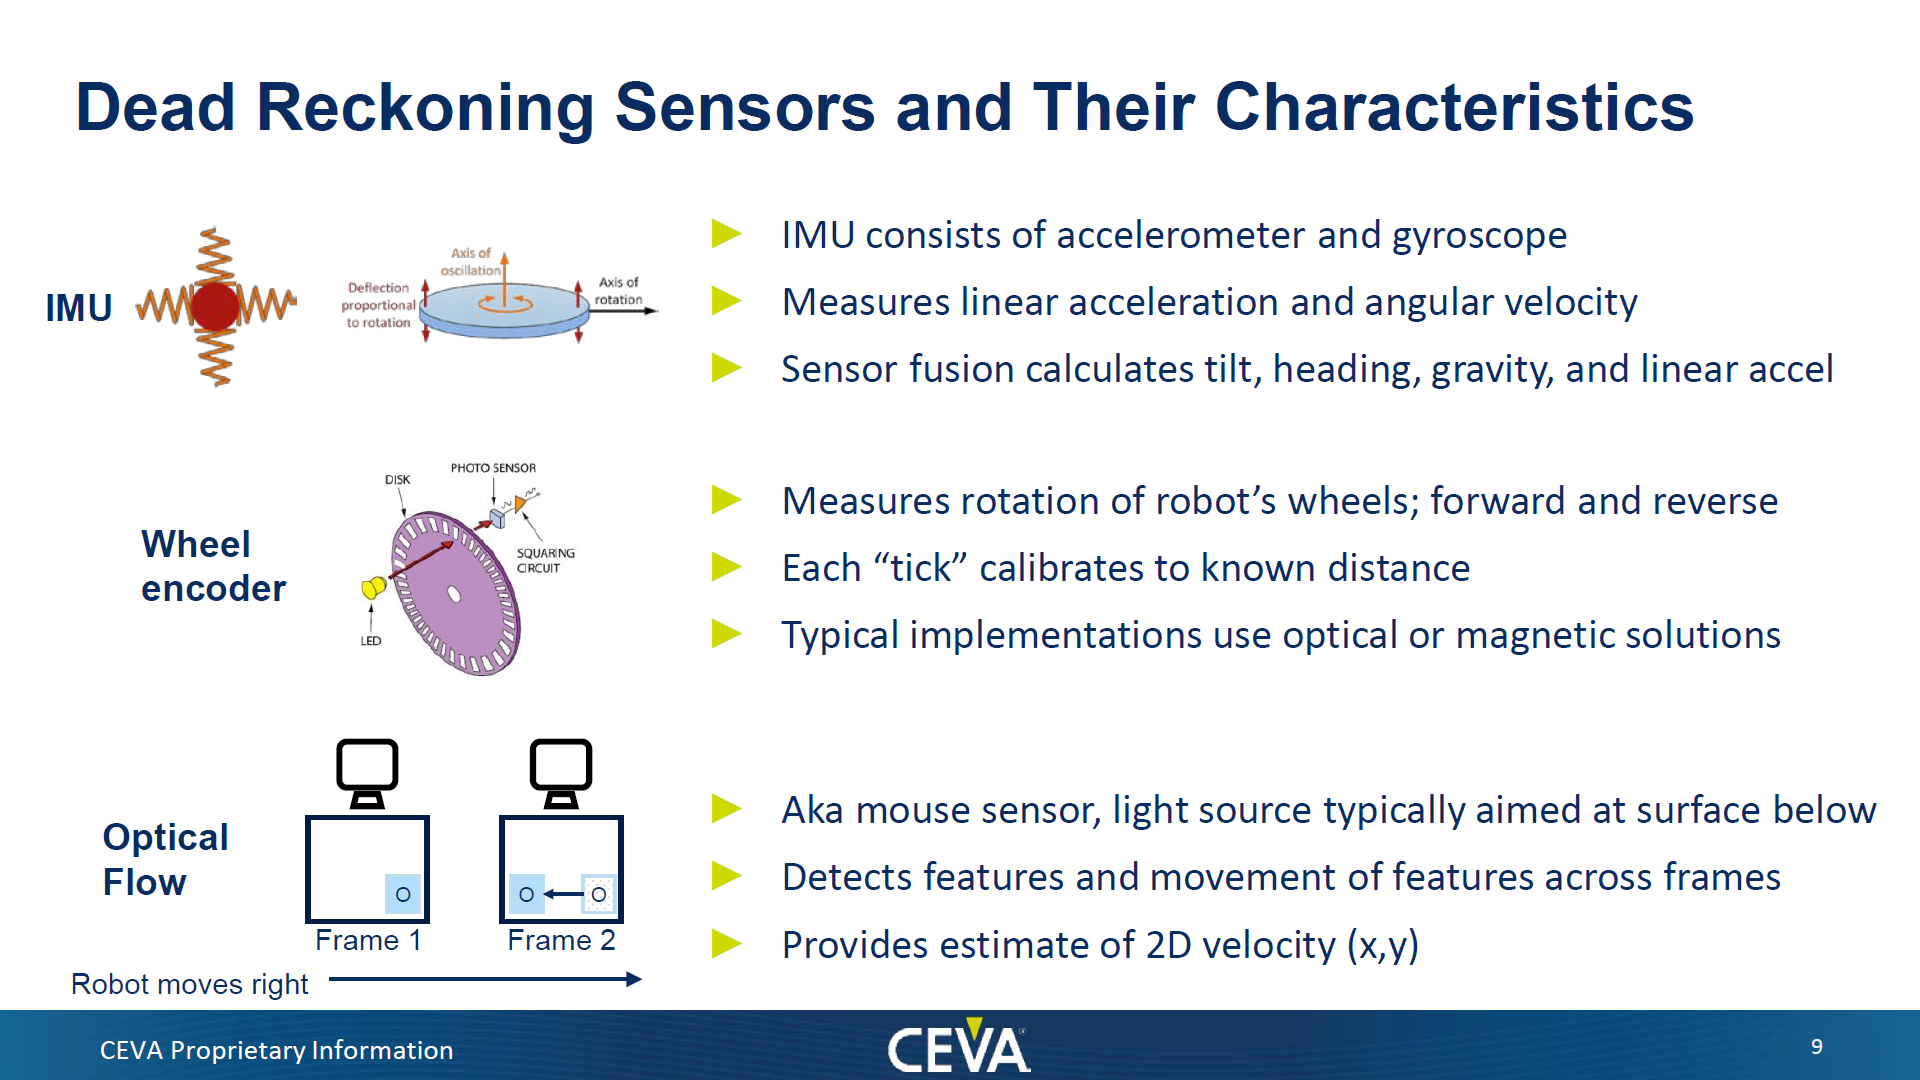 Sensors Characteristics